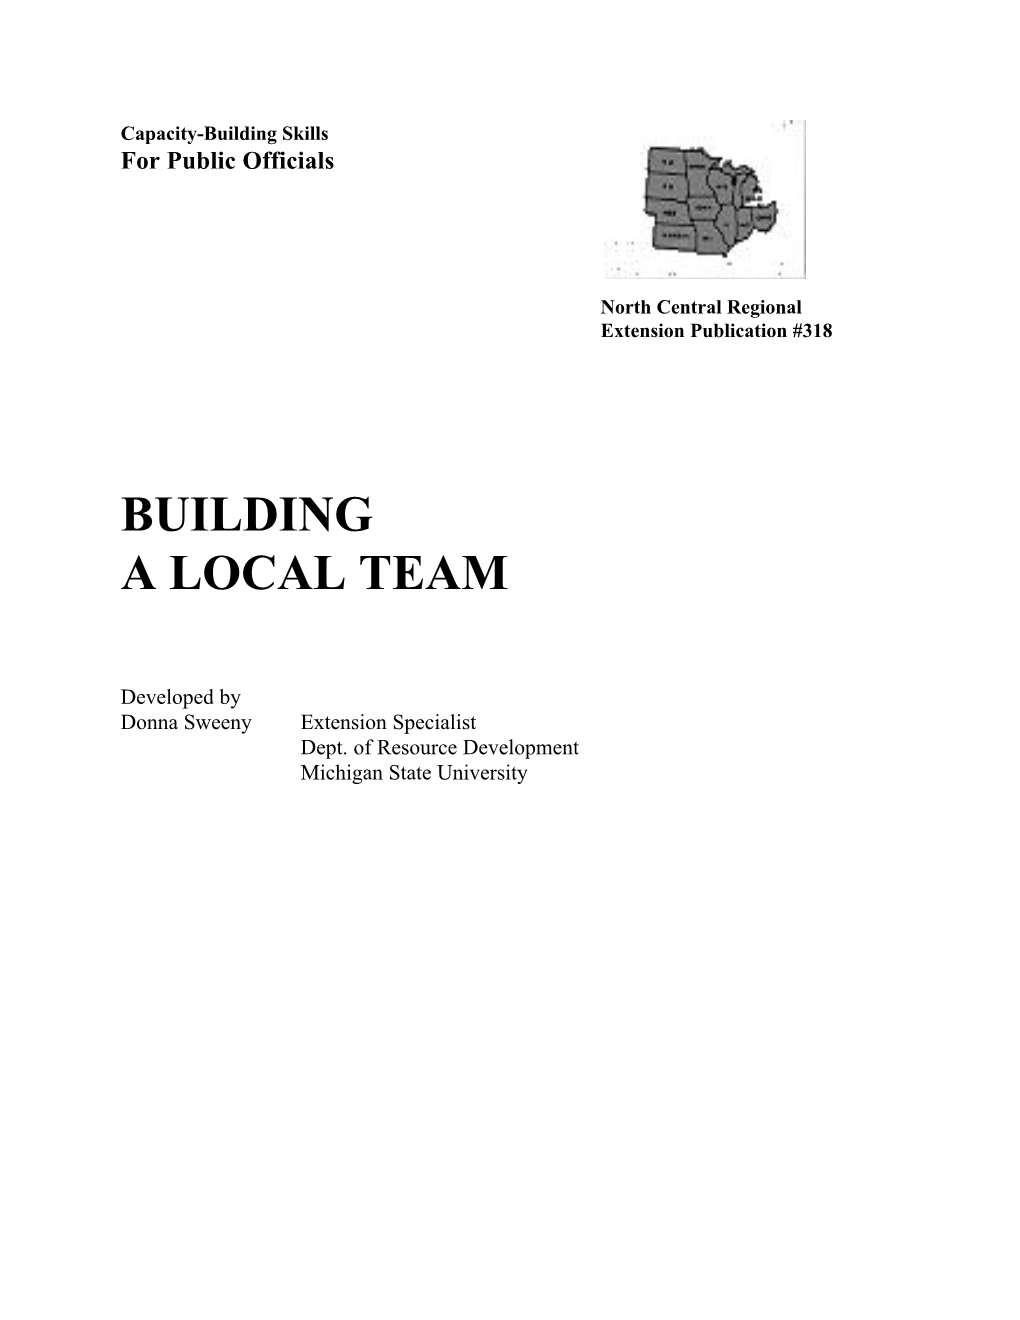 Building a Local Team